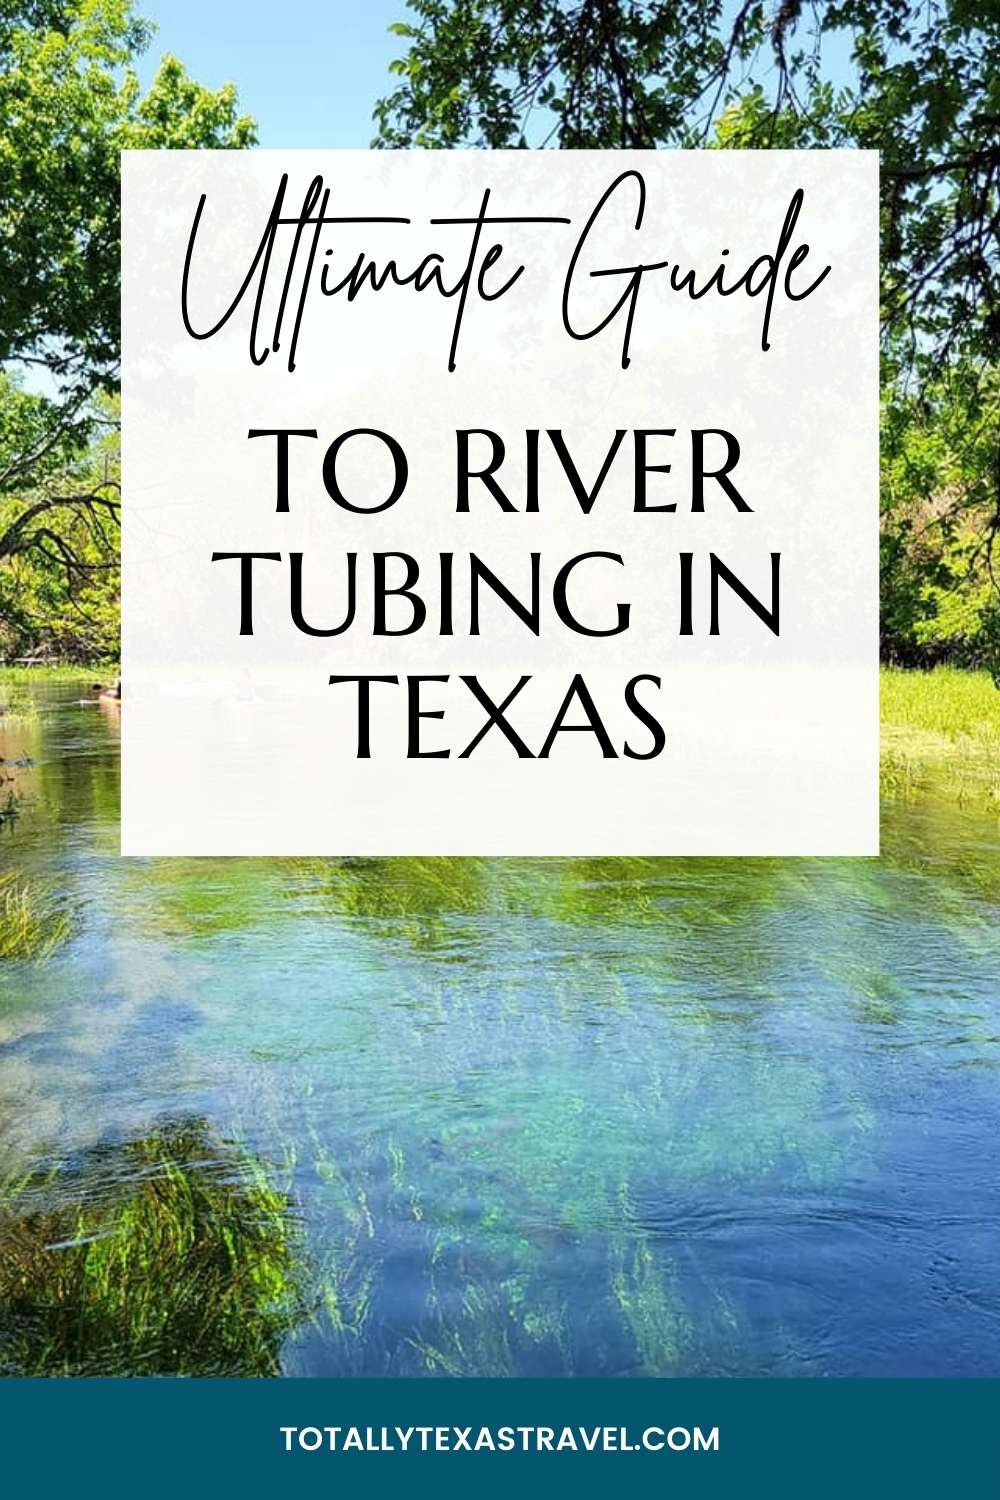 tubing in Texas Pinterest Image